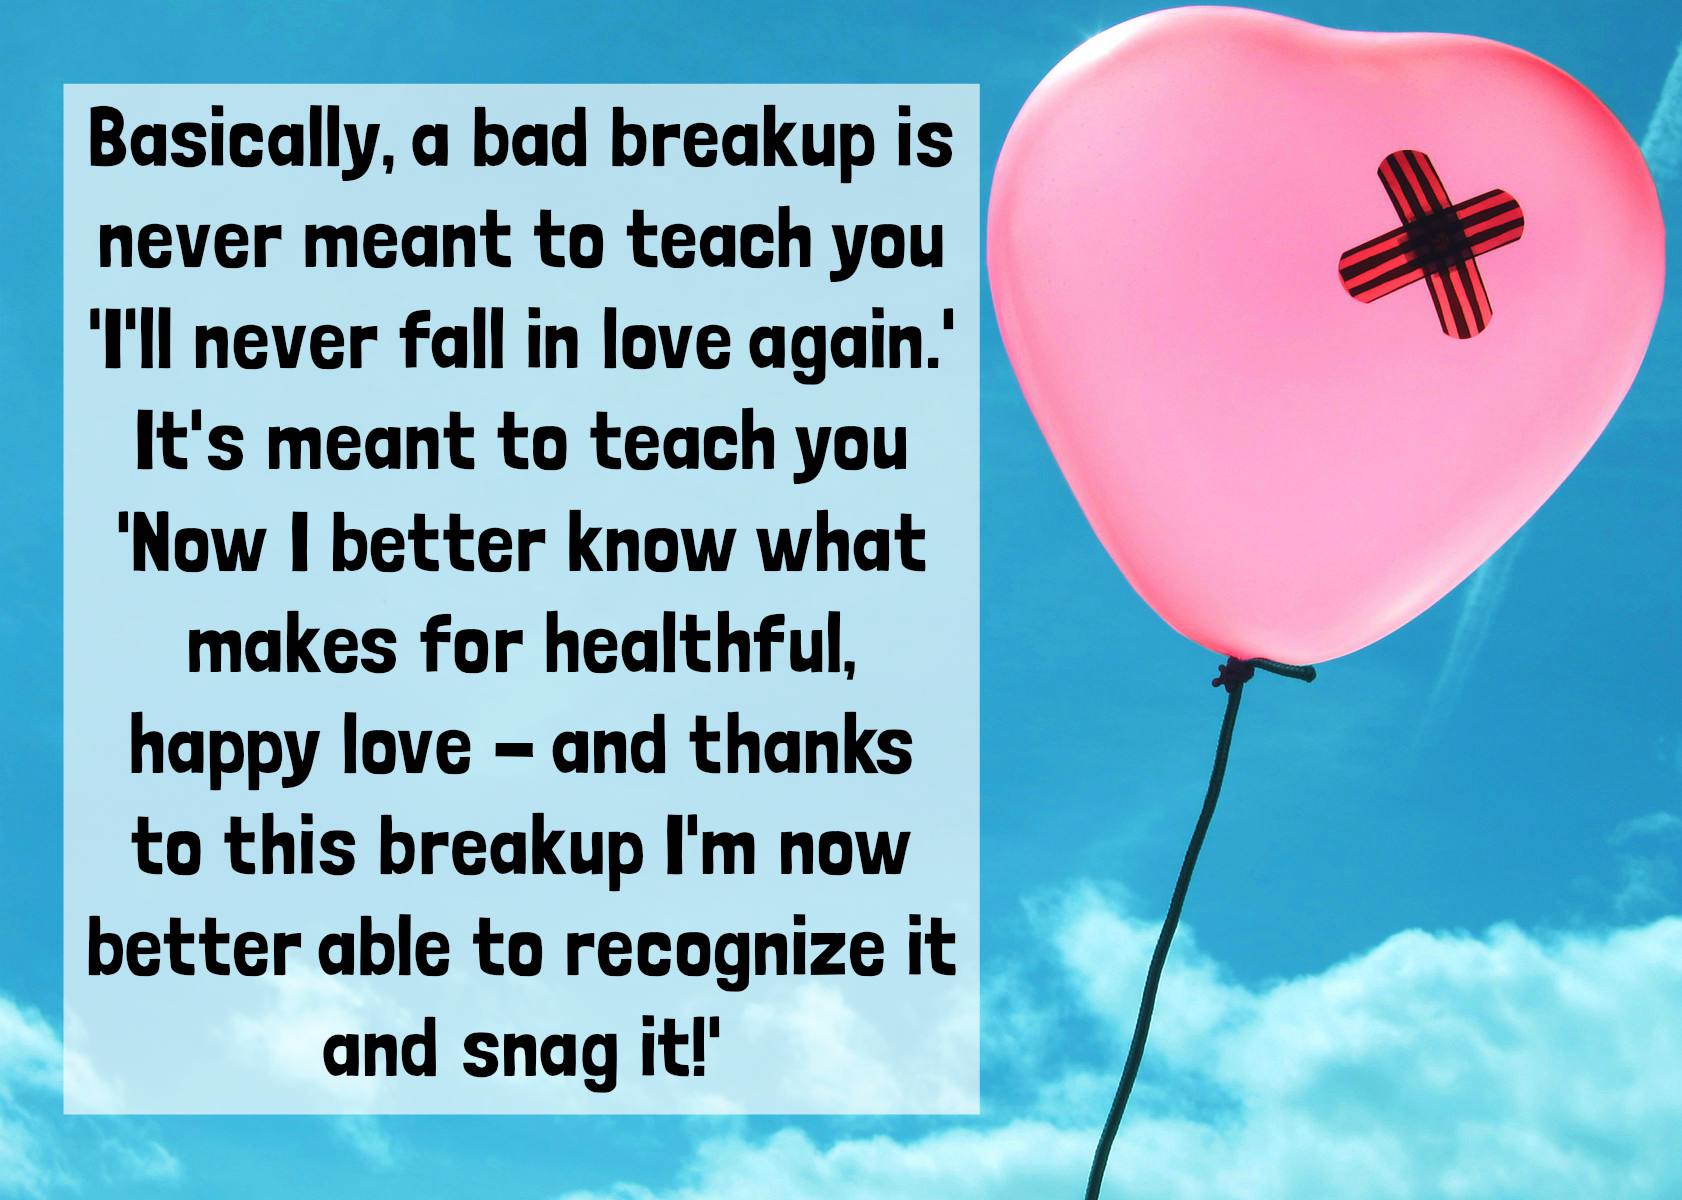 Break Up Quotes